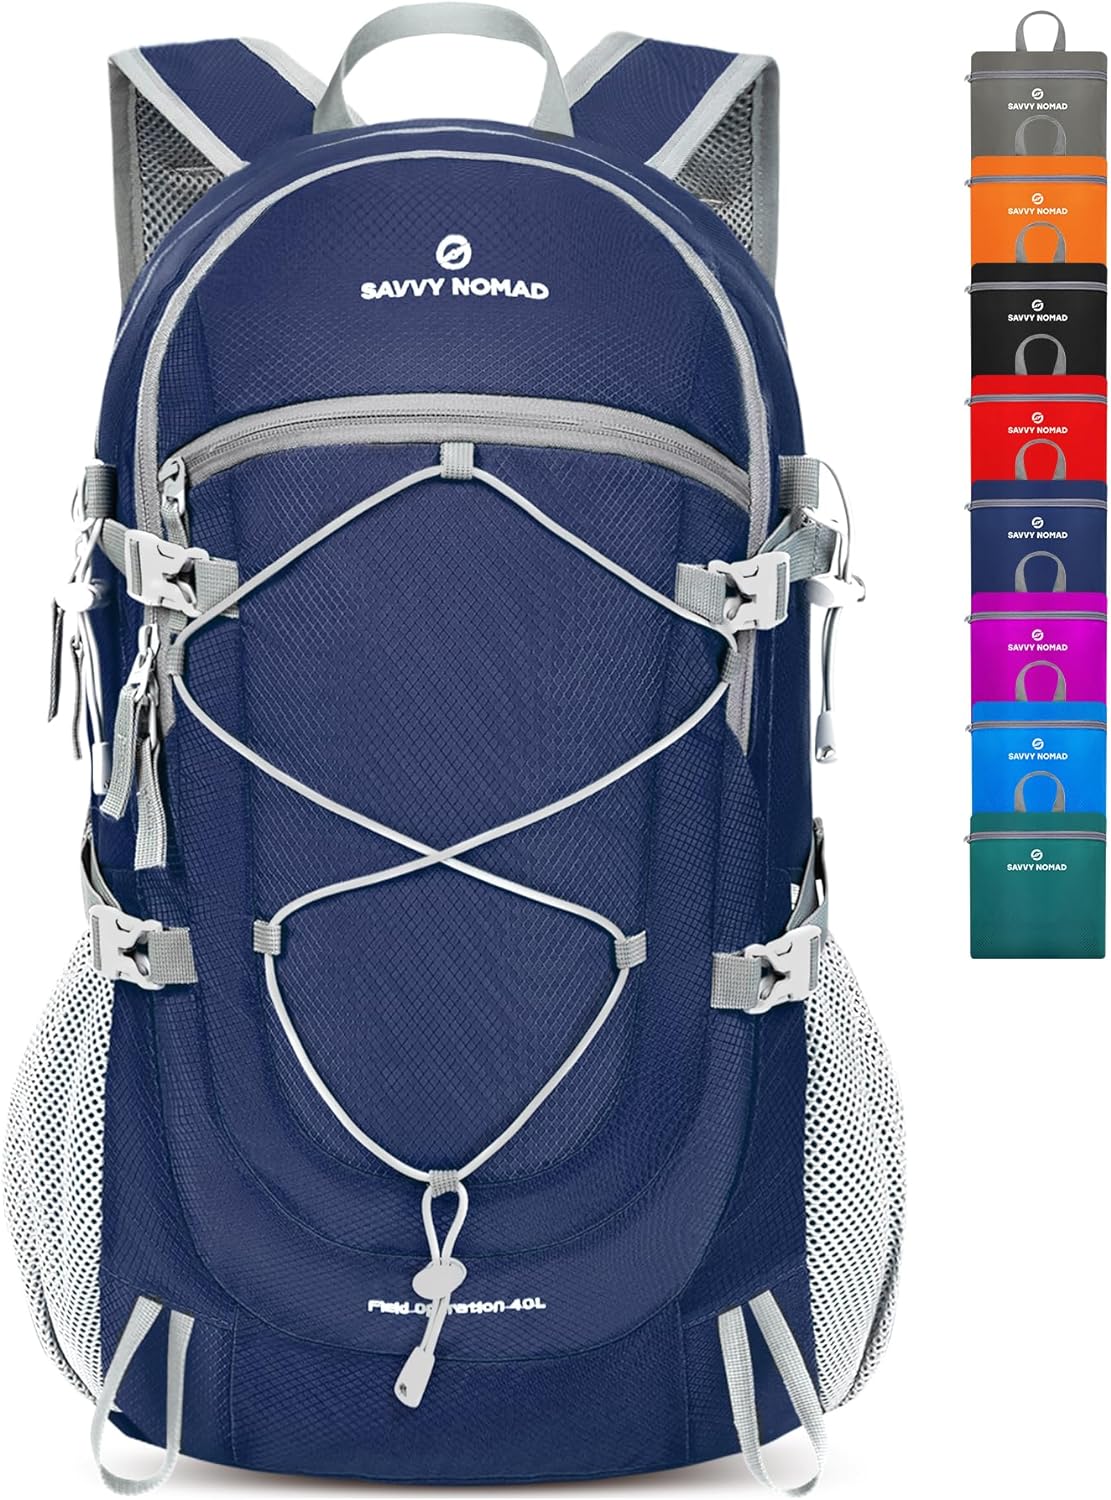 SAVVY NOMAD 40L Hiking Backpack Lightweight Packable Travel Backpack for Women Men